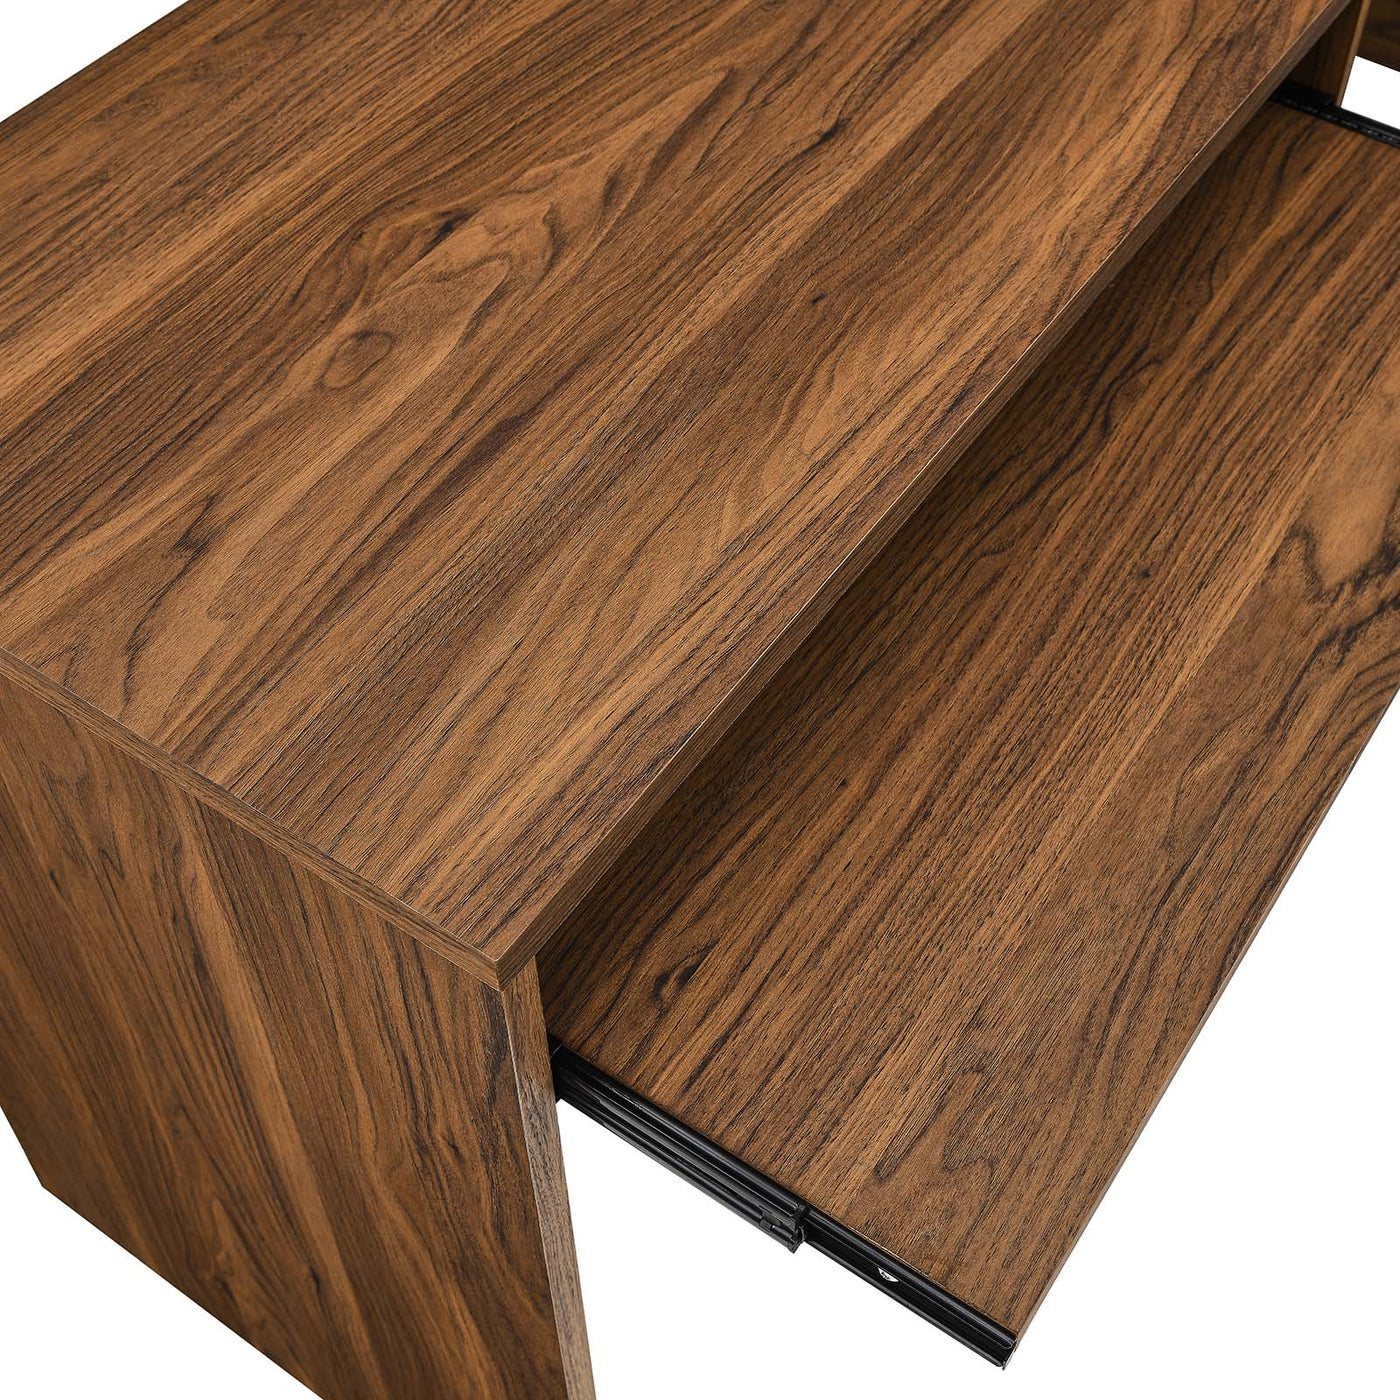 Venture L-Shaped Wood Office Desk